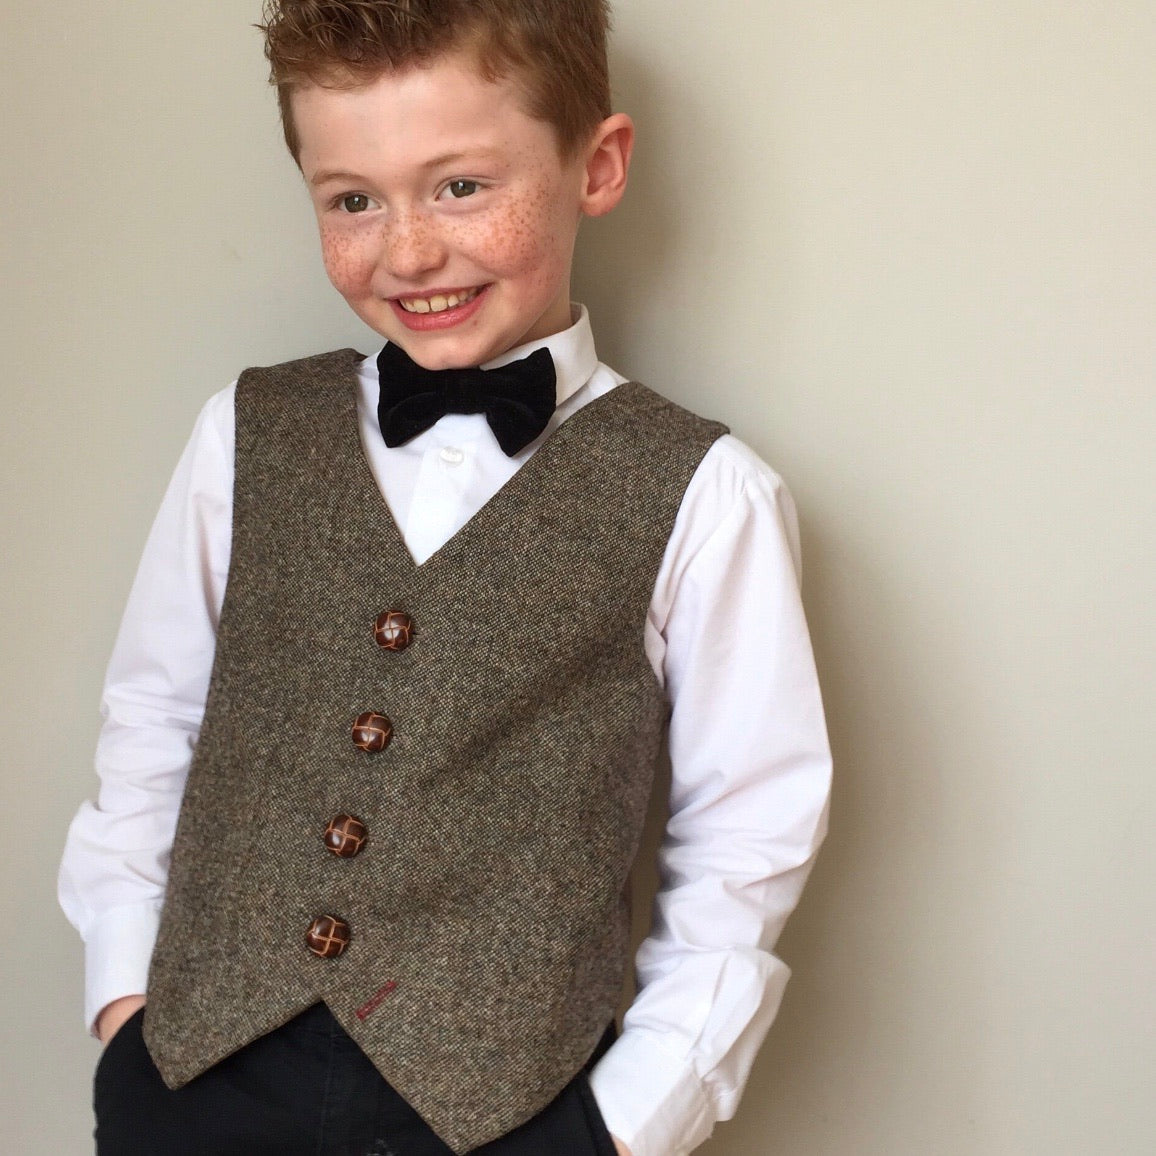 SAMPLE SALE 'Benjamin Button' Boys waistcoat handmade in natural British Tweed size 7-8 years